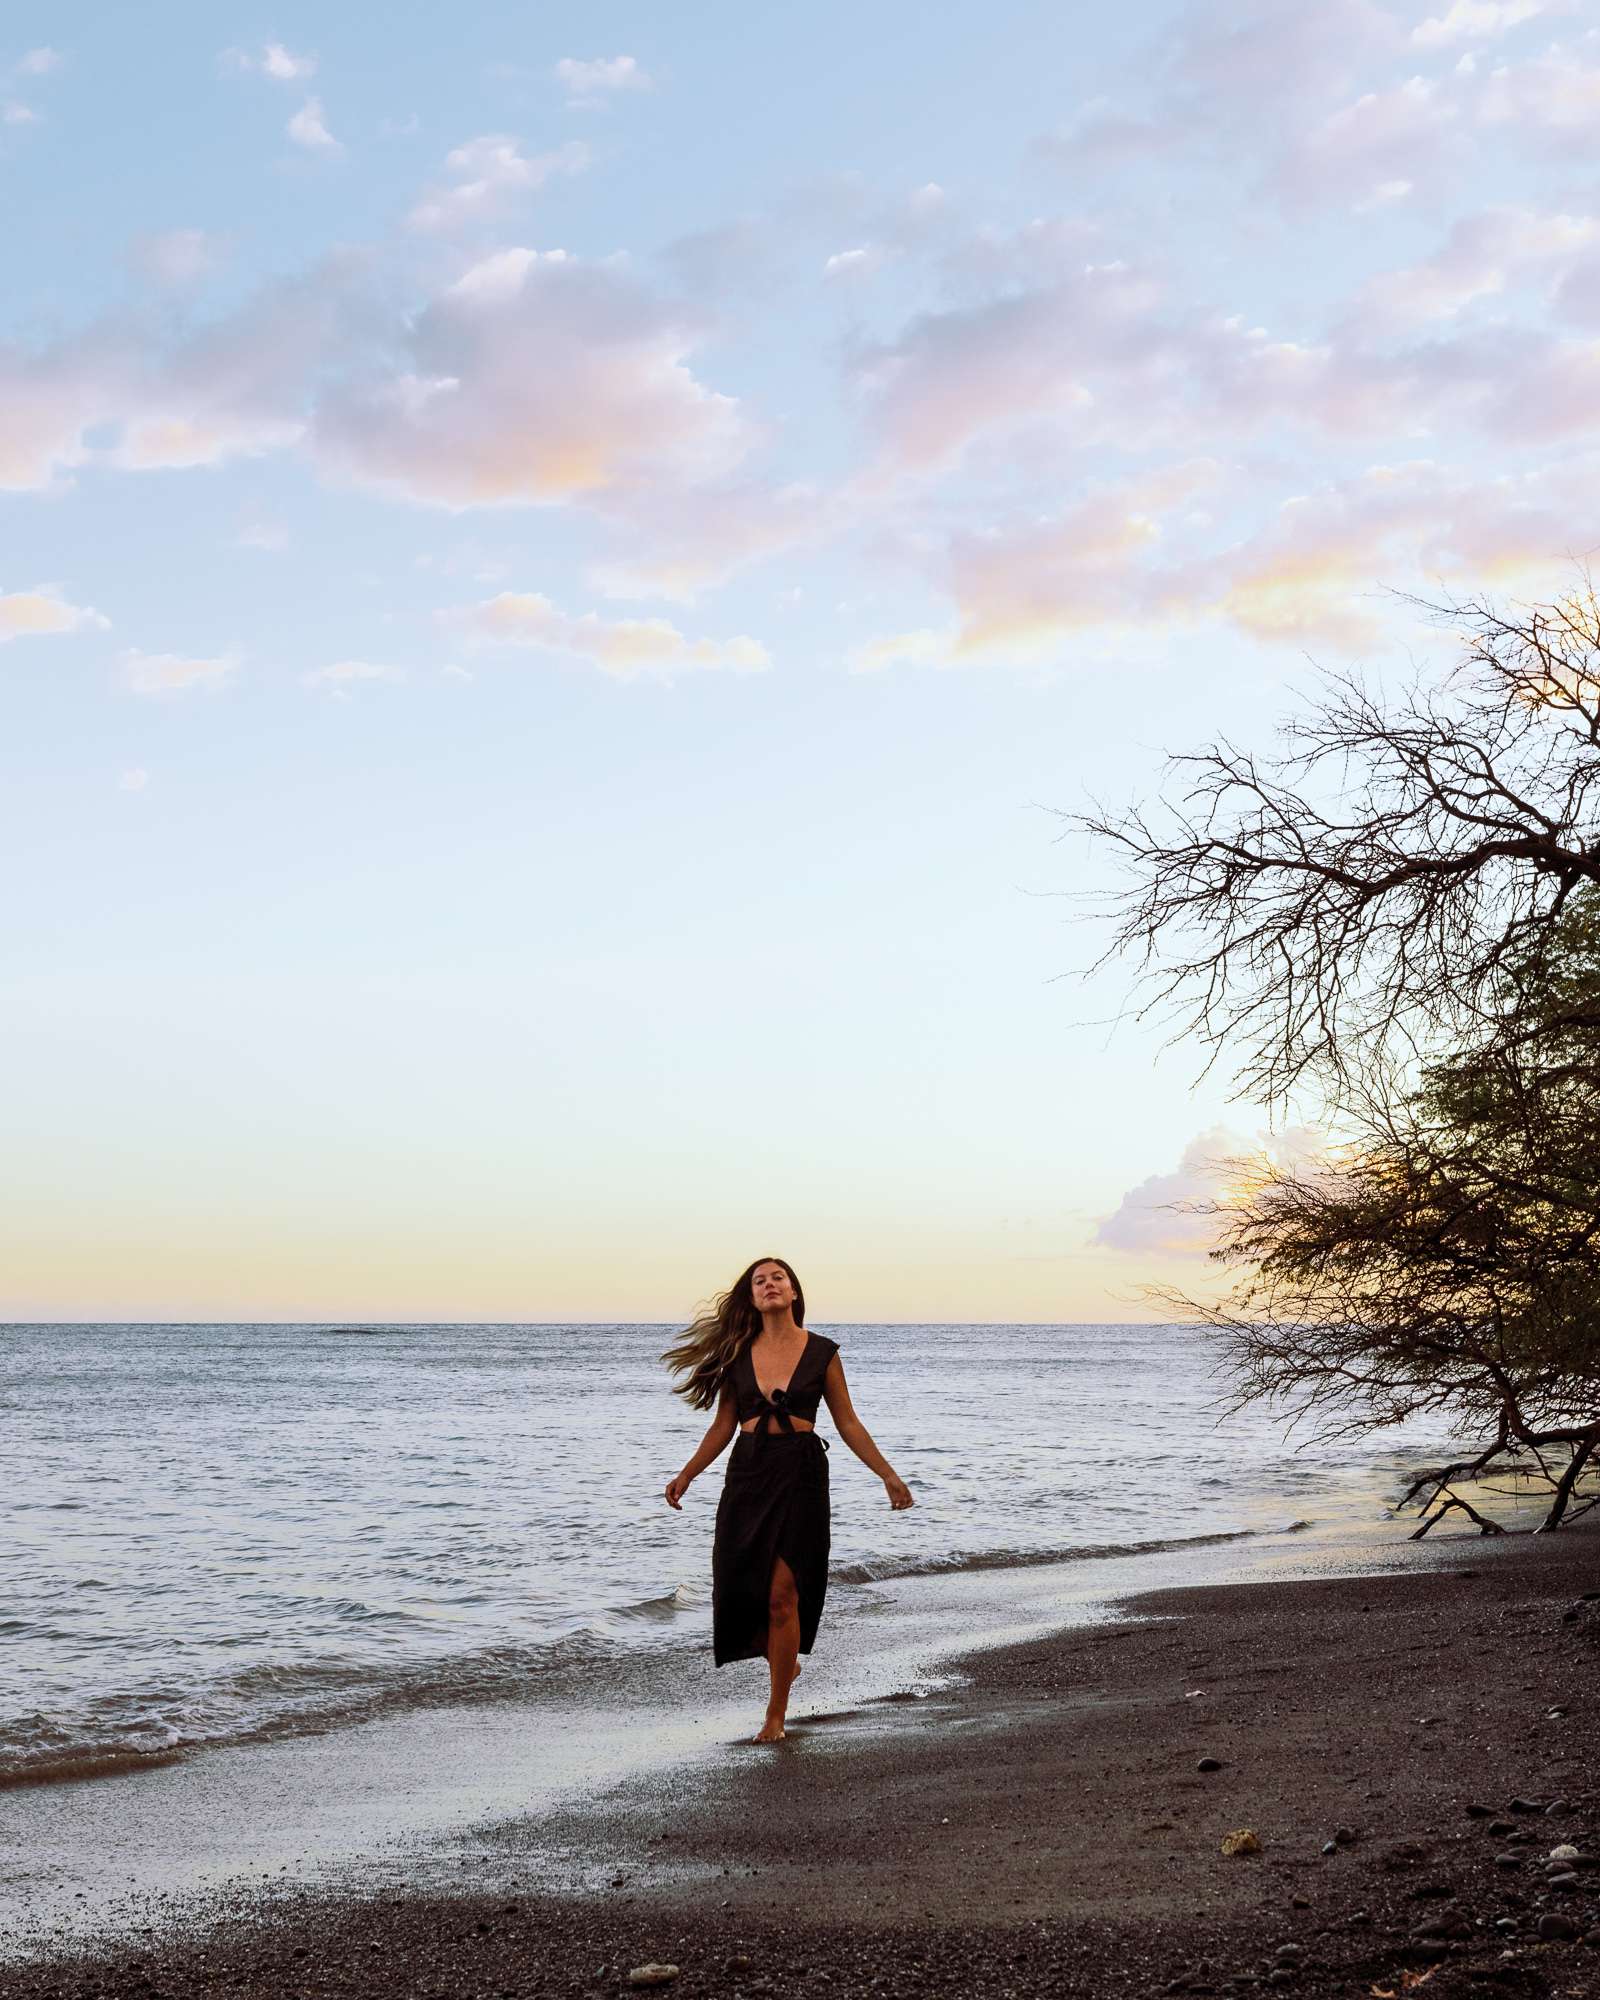 Rachel Off Duty: The Camp Olowalu Location in Maui by the Ocean